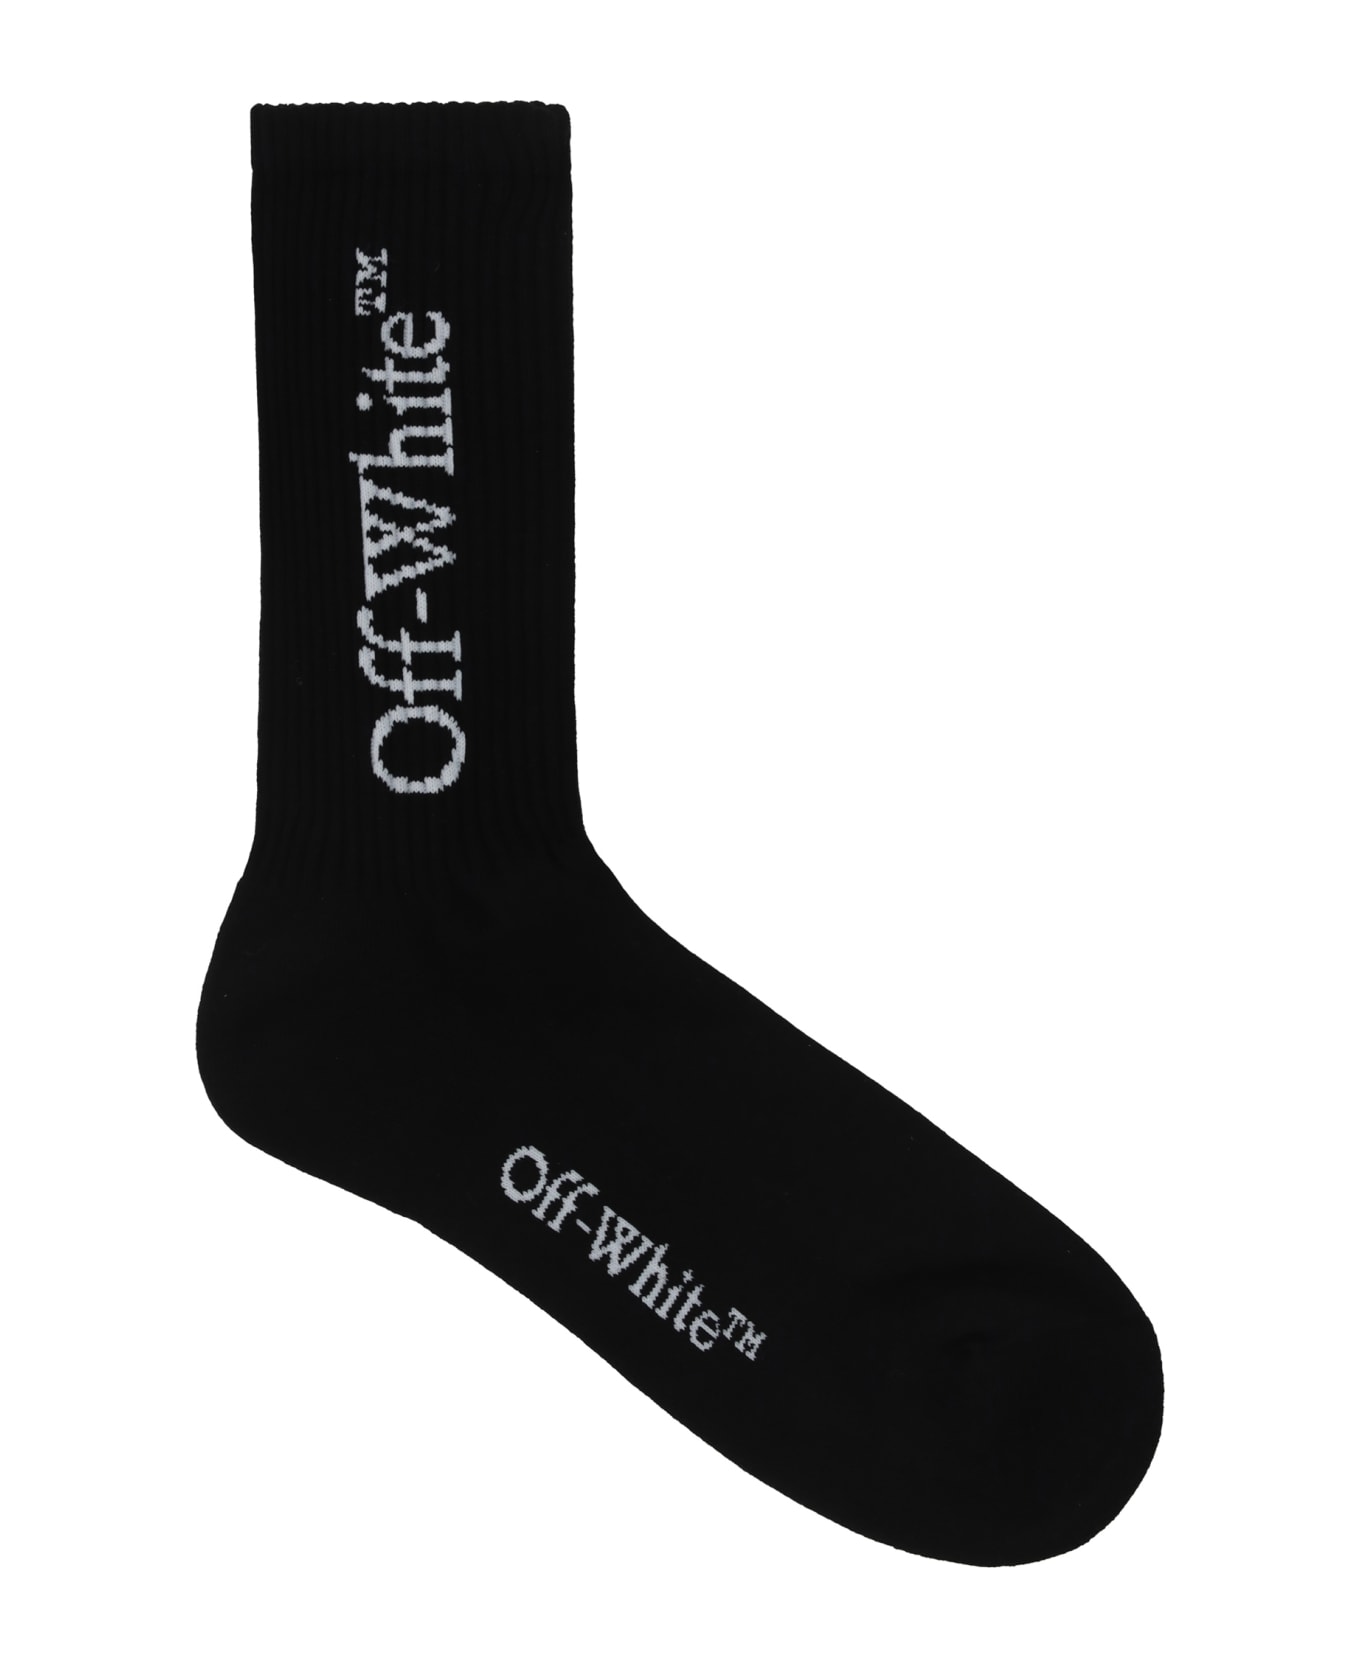 Off-White Big Logo Bksh Mid Calf Socks - Black White 靴下